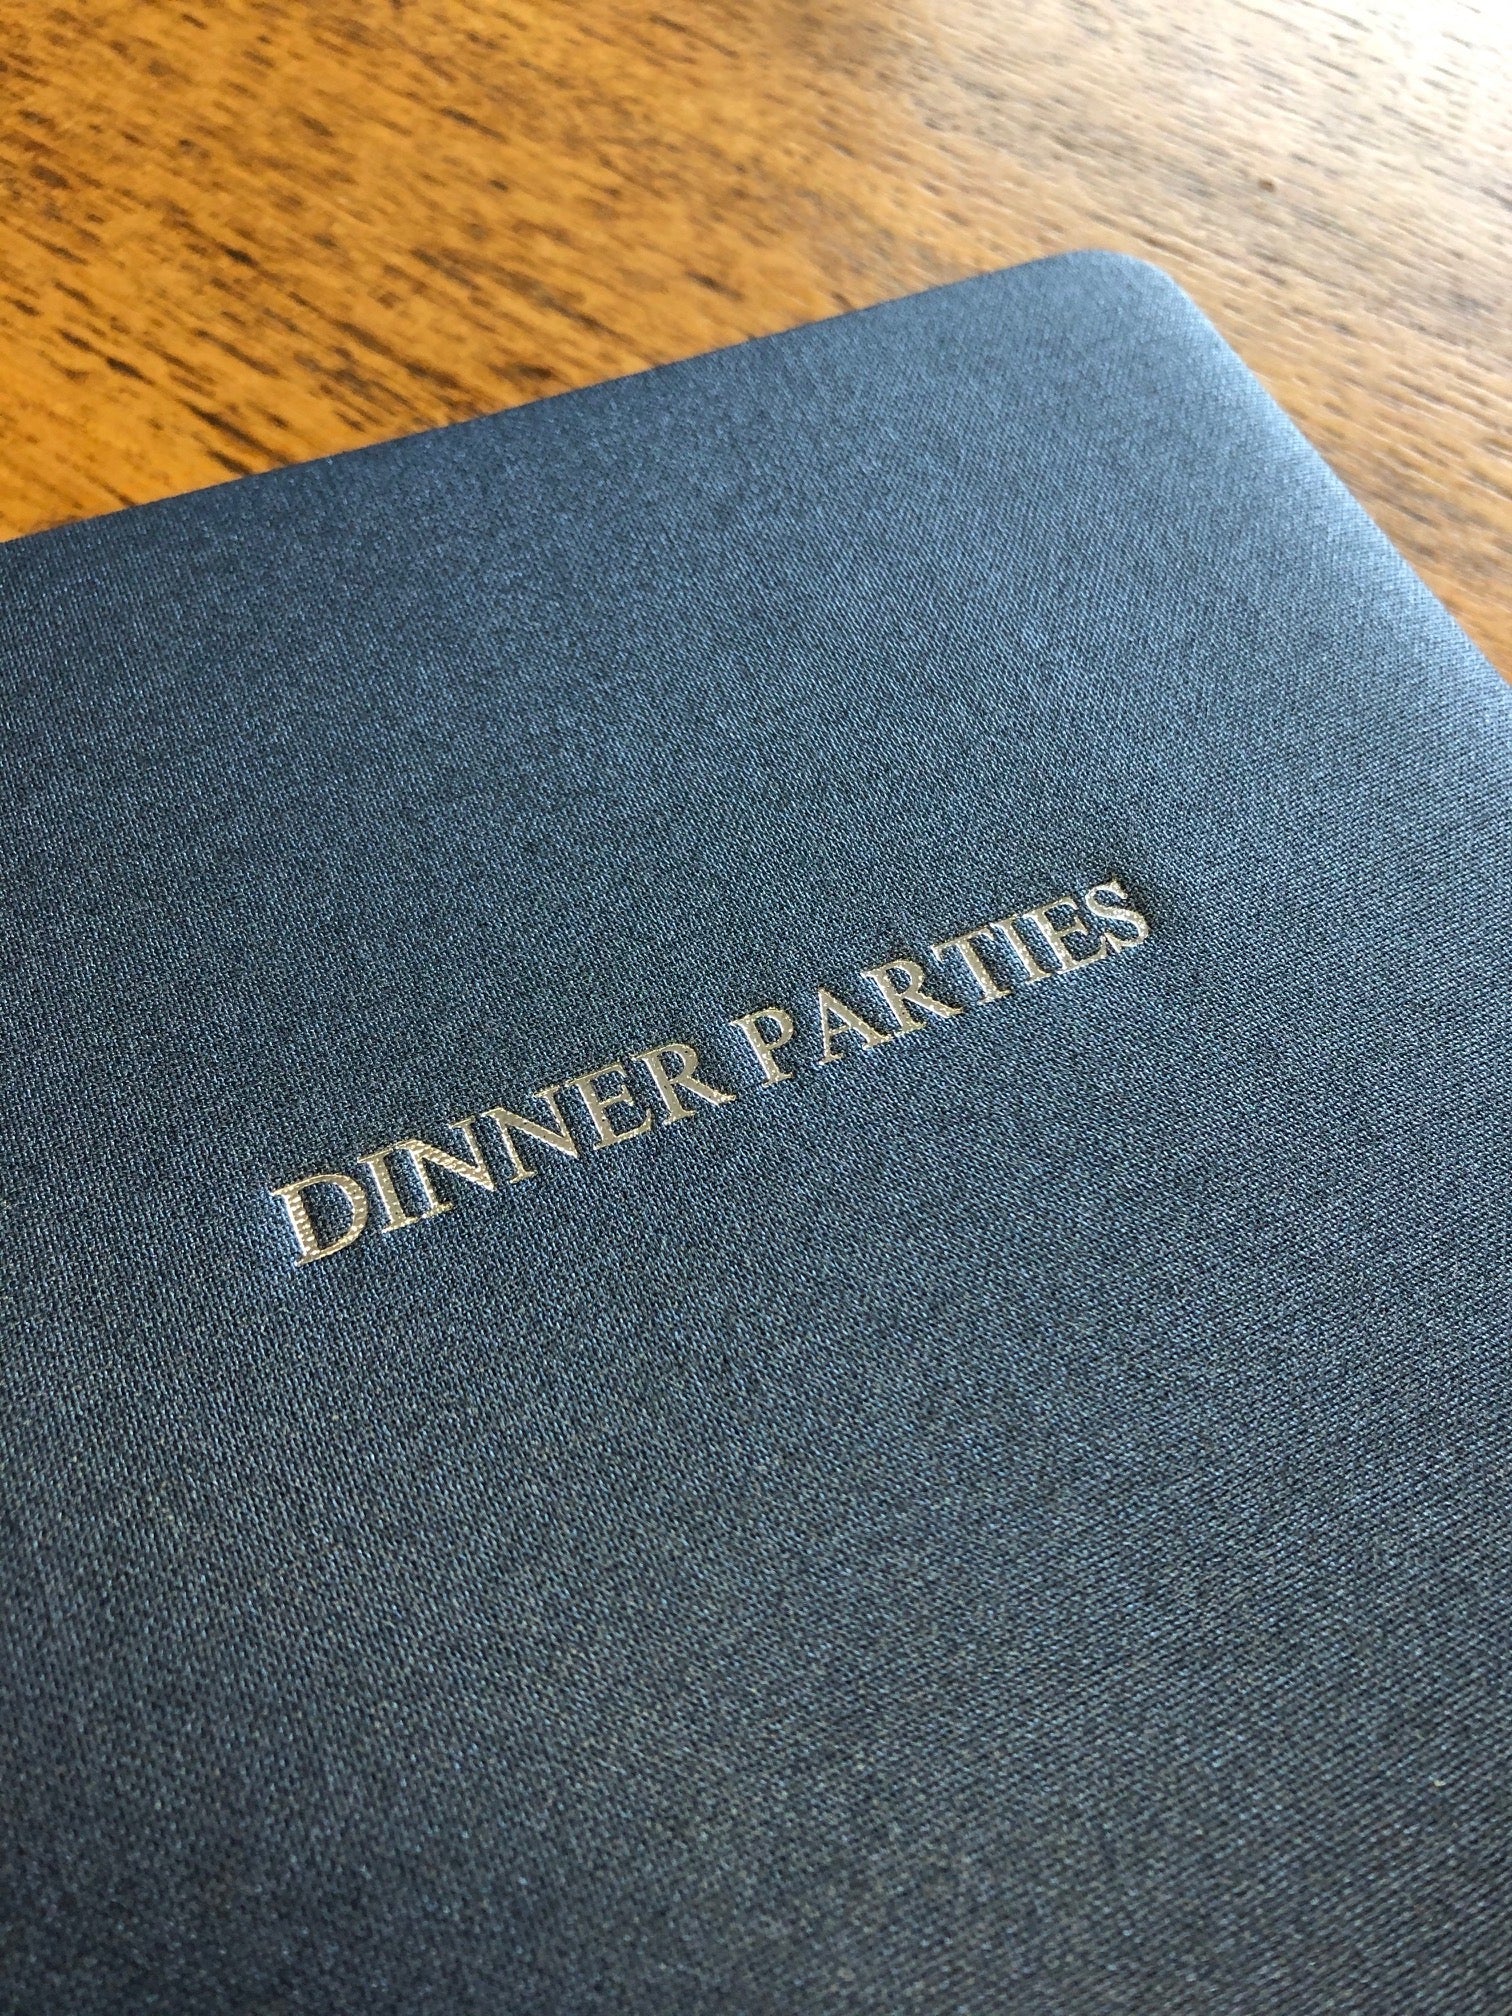 Text Image of Metallic Buckram Sapphire Dinner Party Book